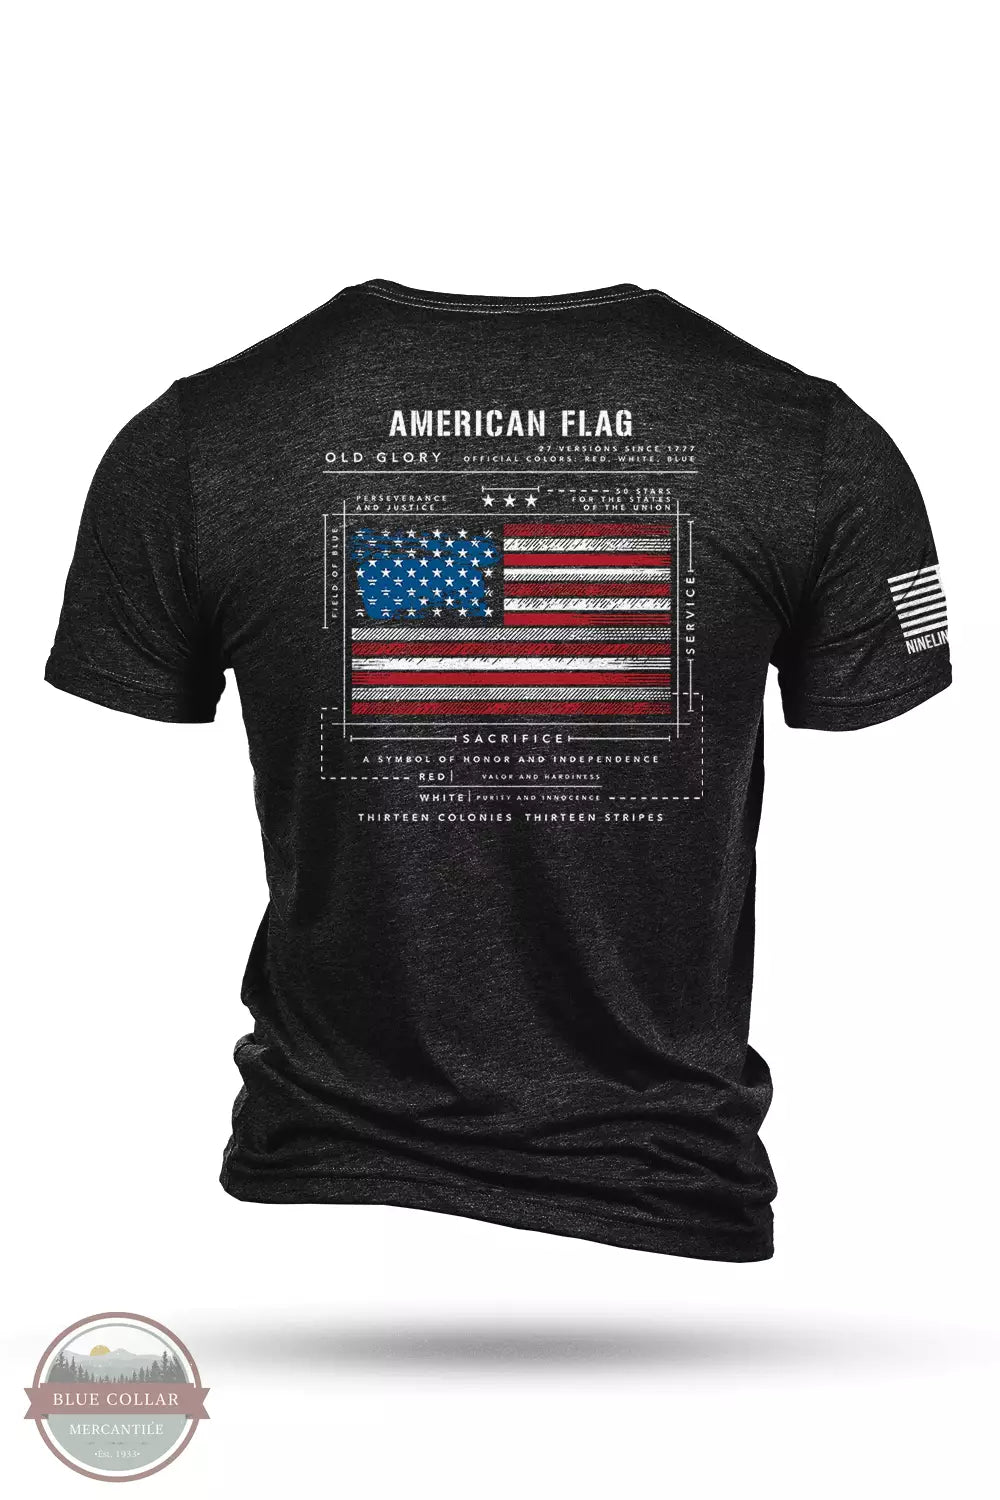 Nine Line FLAGSCH-TSTRI-CHARCOALBLACK American Flag Schematic Tri-Blend Short Sleeve T-Shirt in Charcoal Black Back View